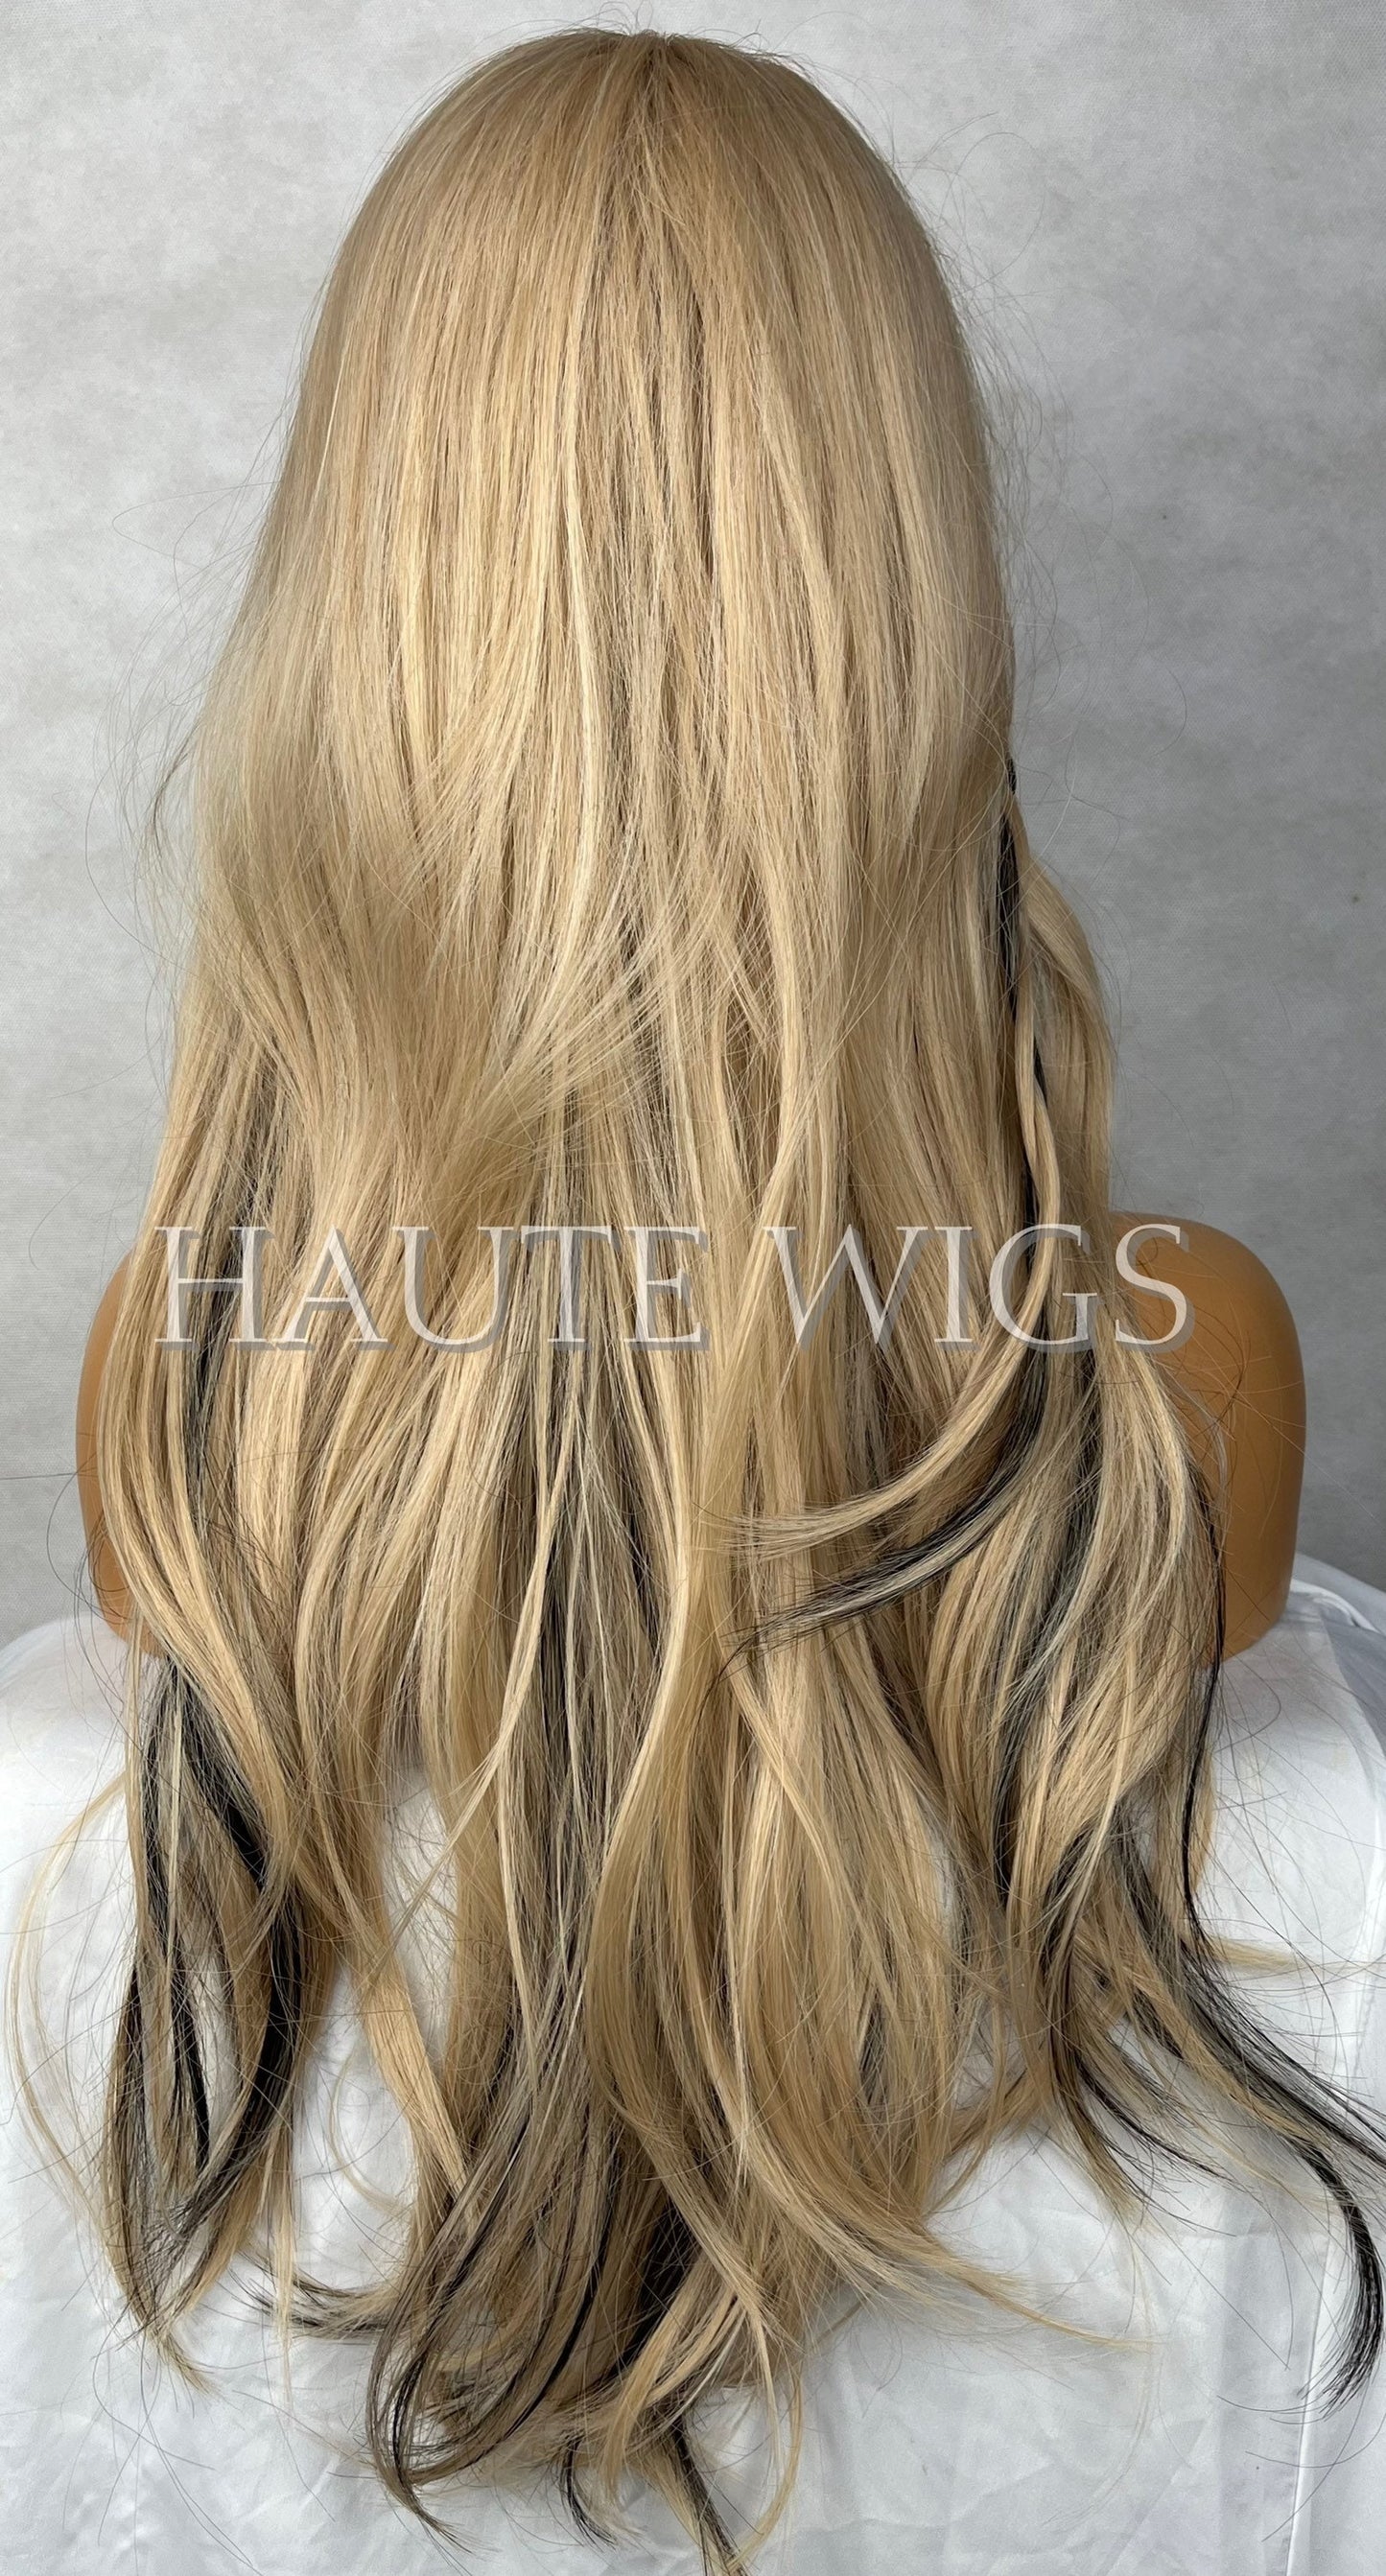 24 Inch Long Sexy Blonde Wig W. Black Highlights Lowlights Womens Hair Fringe Bangs Wavy Layered Christina Aguilera Dirrty inspired hair